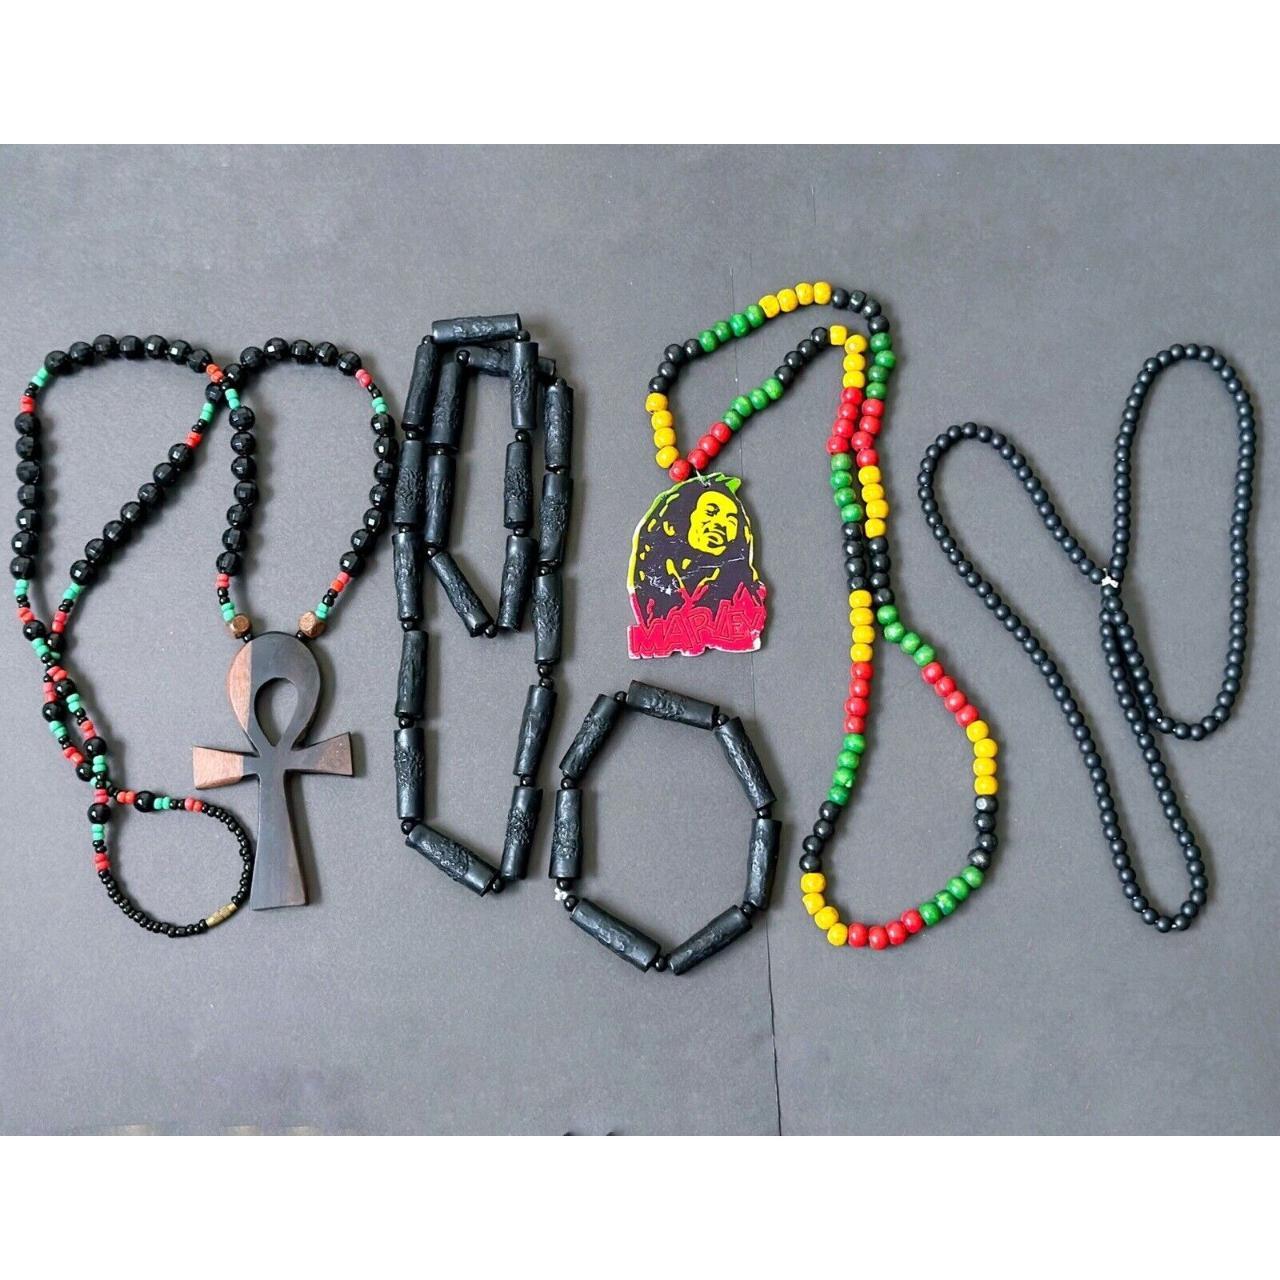 Bob Marley Africa Wooden Pendant Necklace Beads Chain Wood Long Rasta  Jamaica | eBay